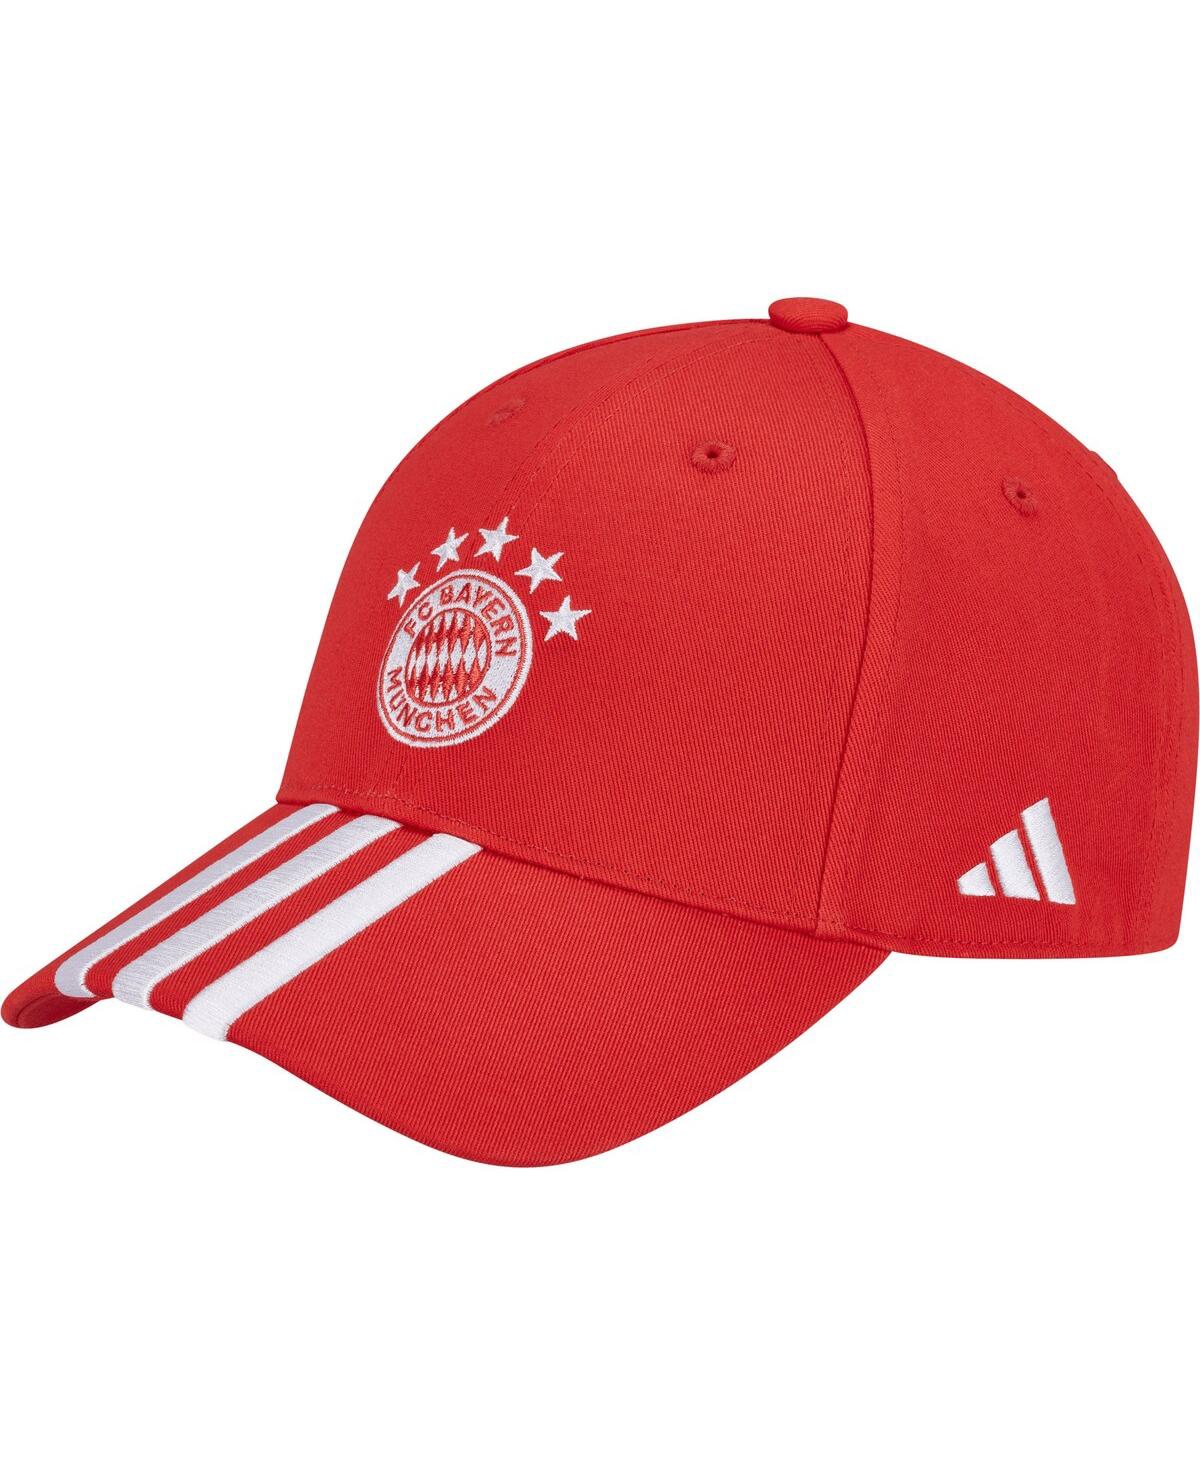 Shop Adidas Originals Men's Adidas Red Bayern Munich Baseballâ Adjustable Hat